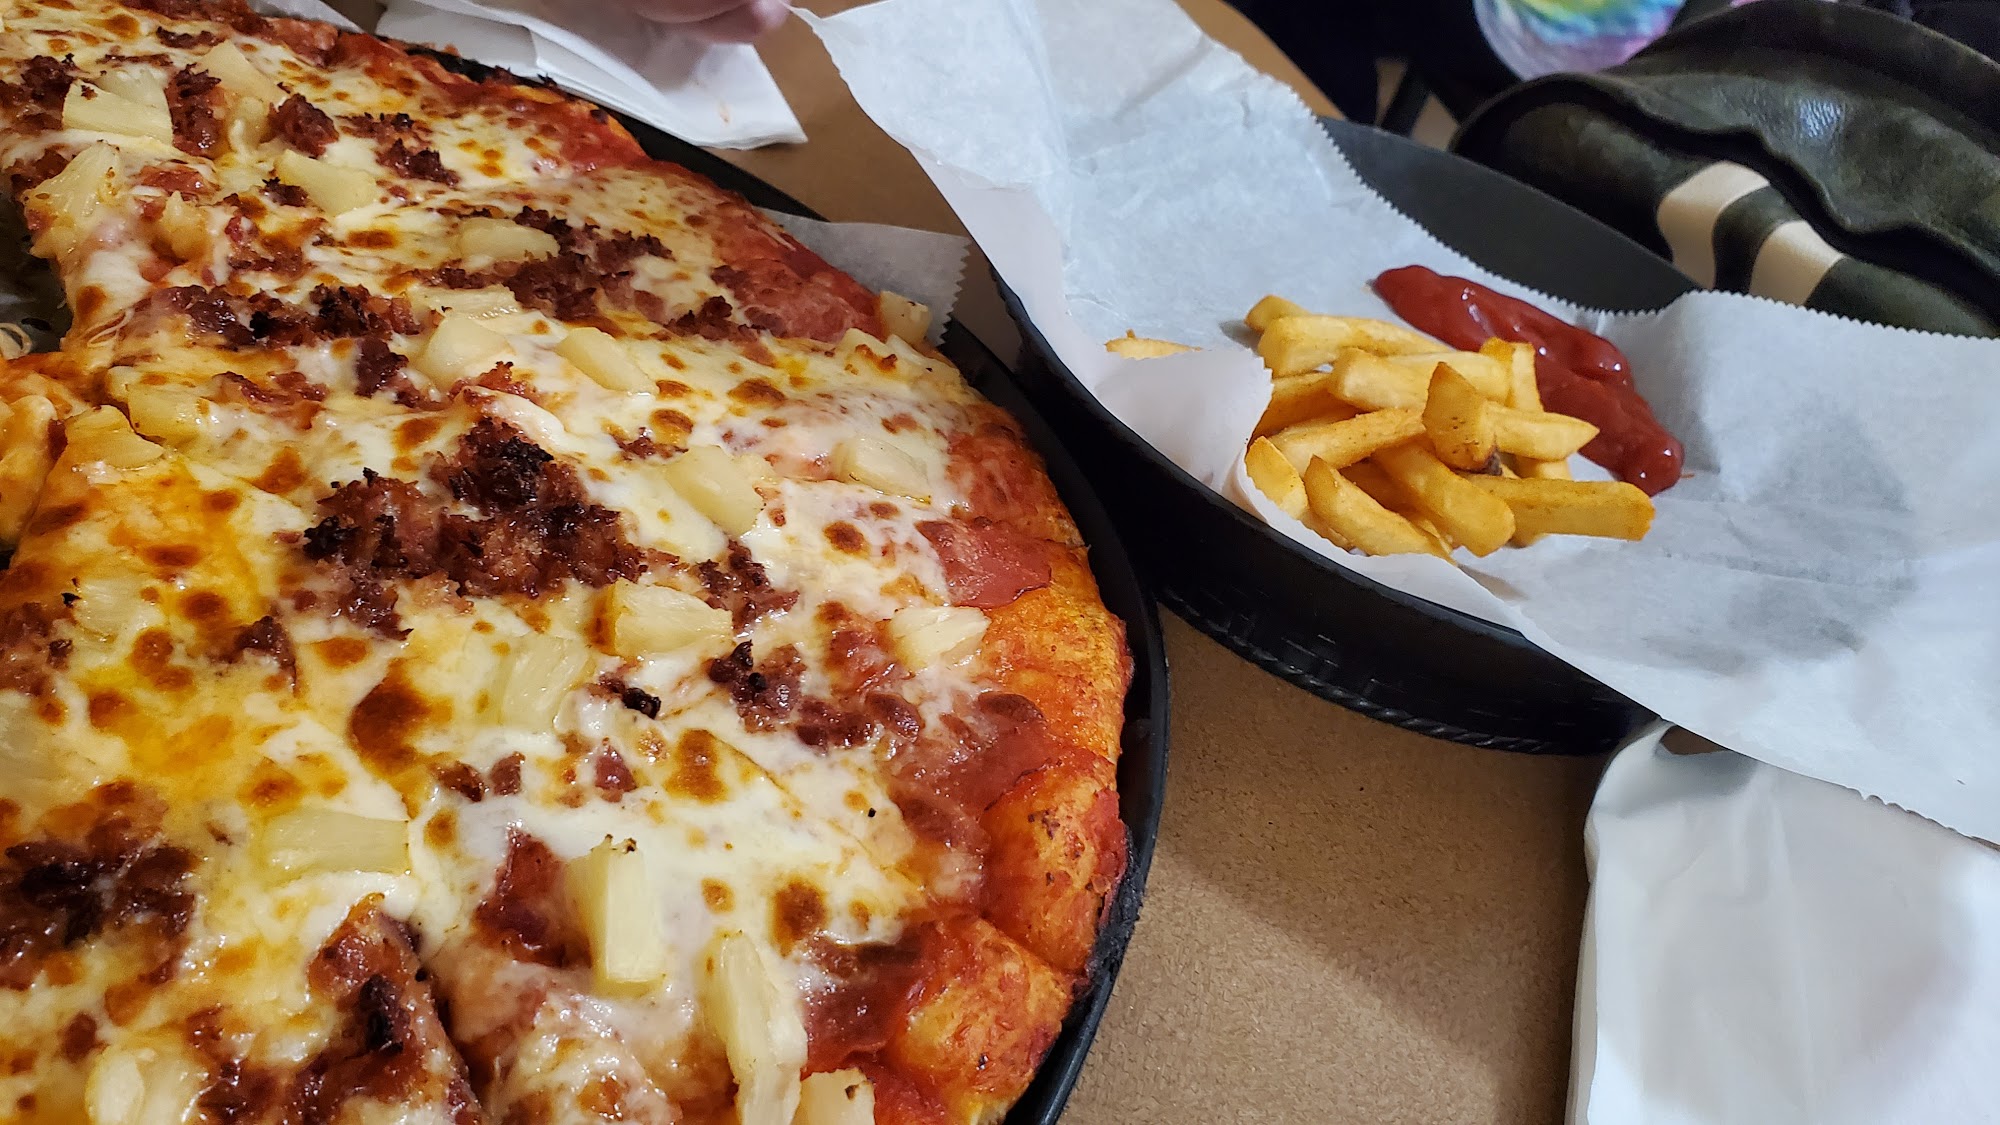 Gino's Pizza & Spaghetti House